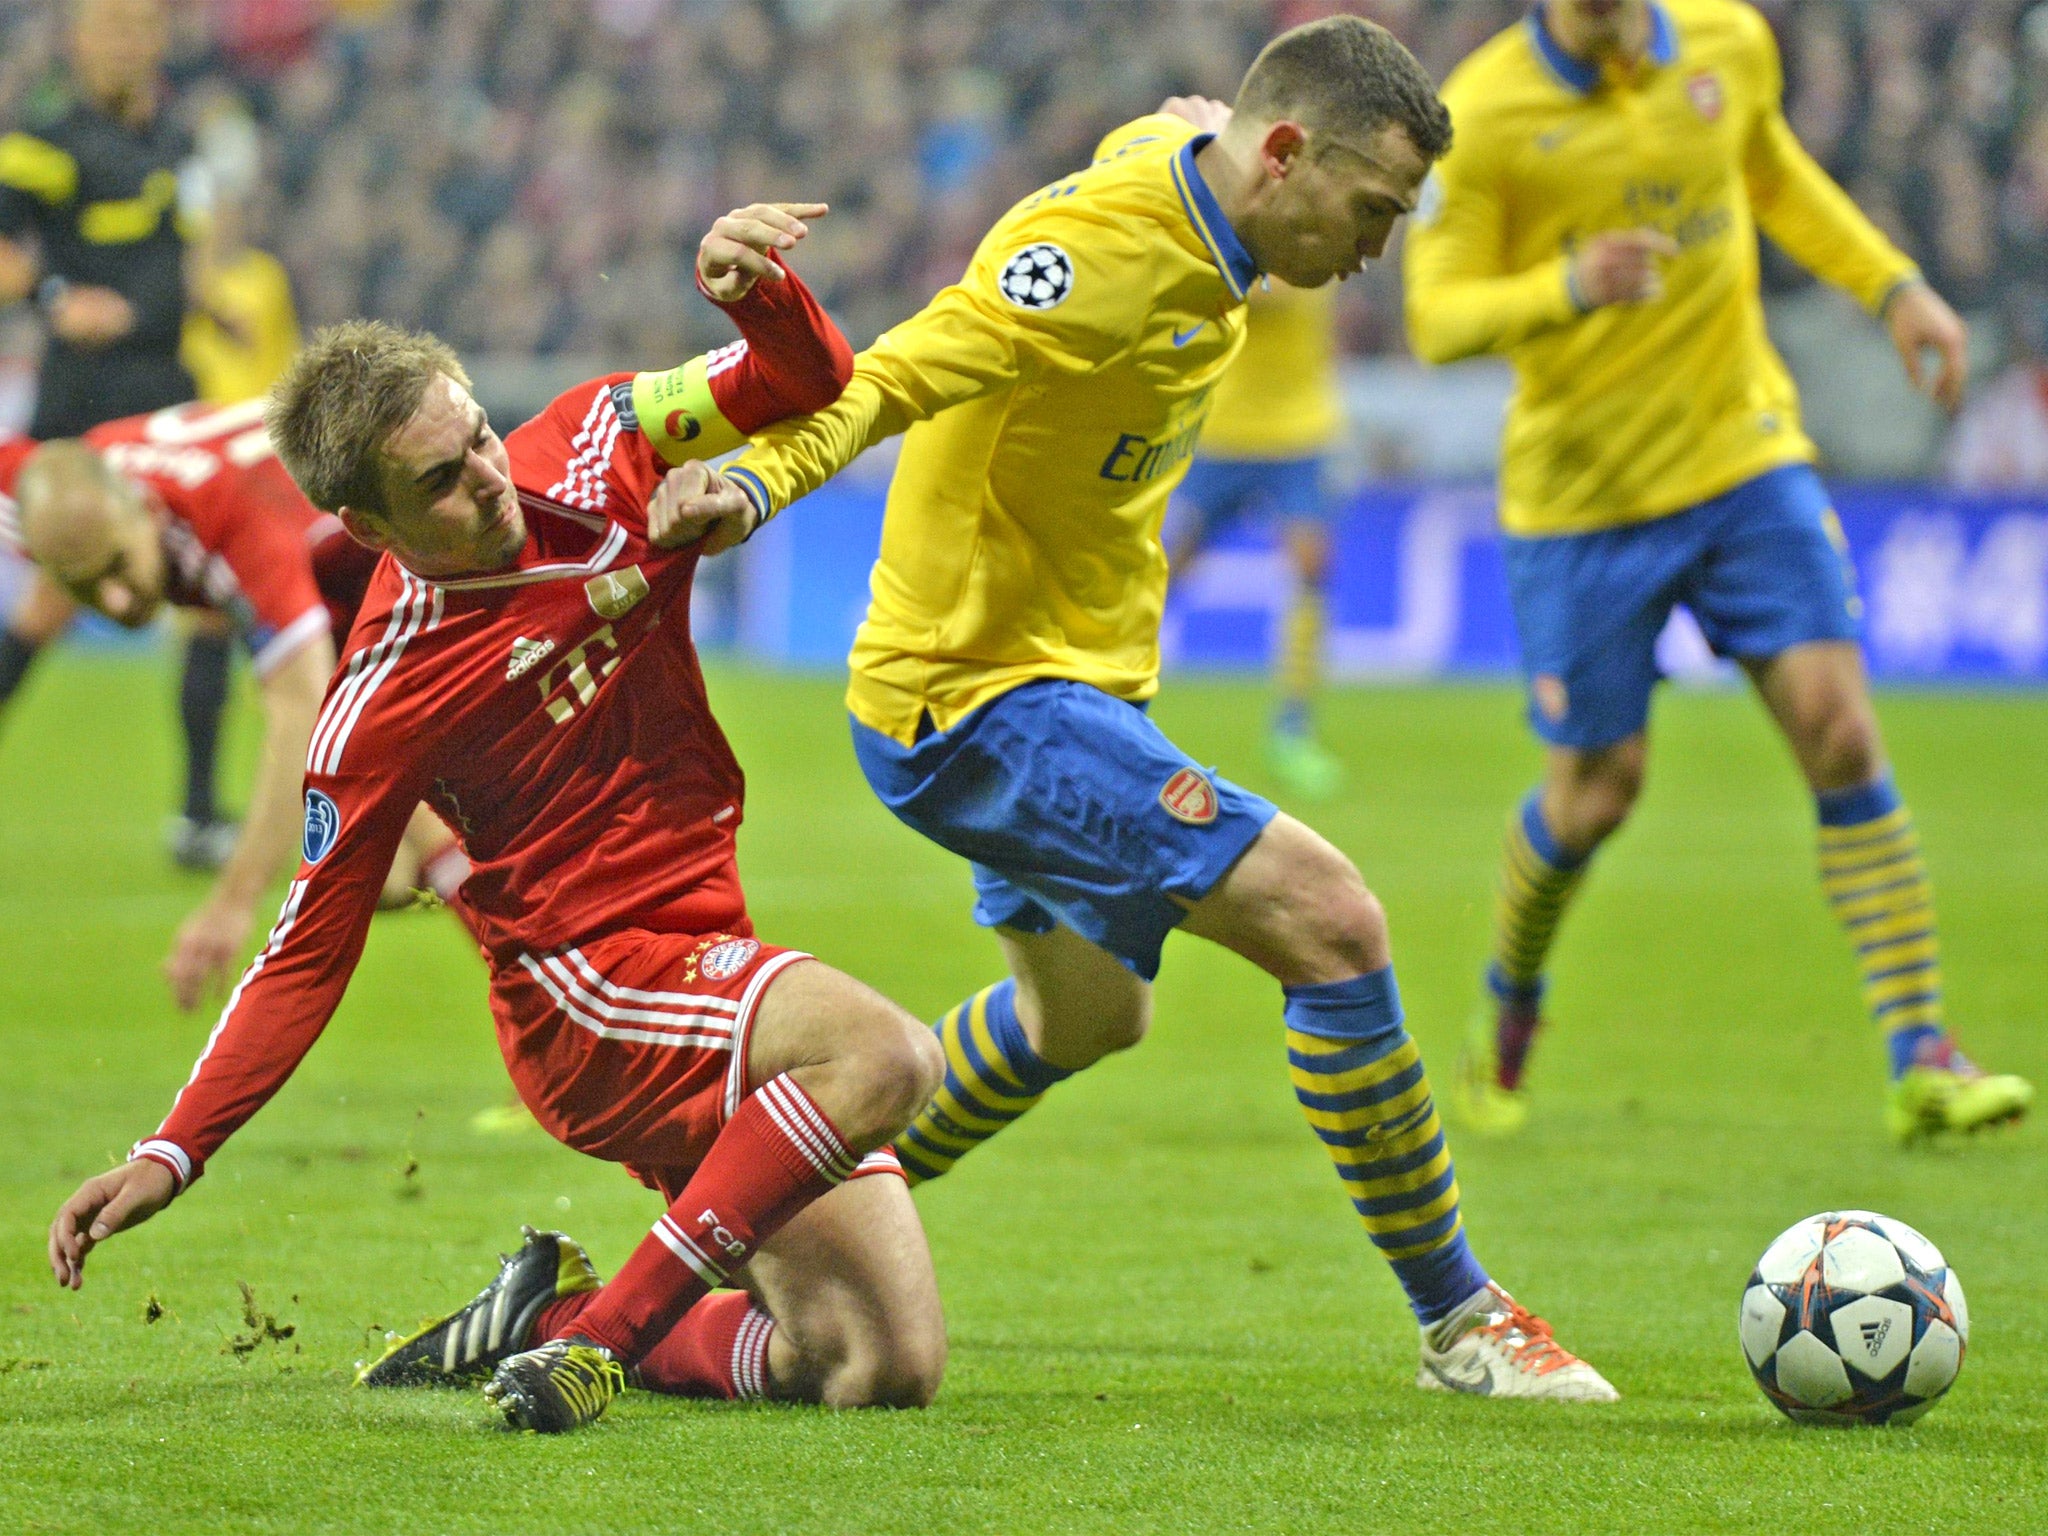 Thomas Vermaelen in action against Bayern